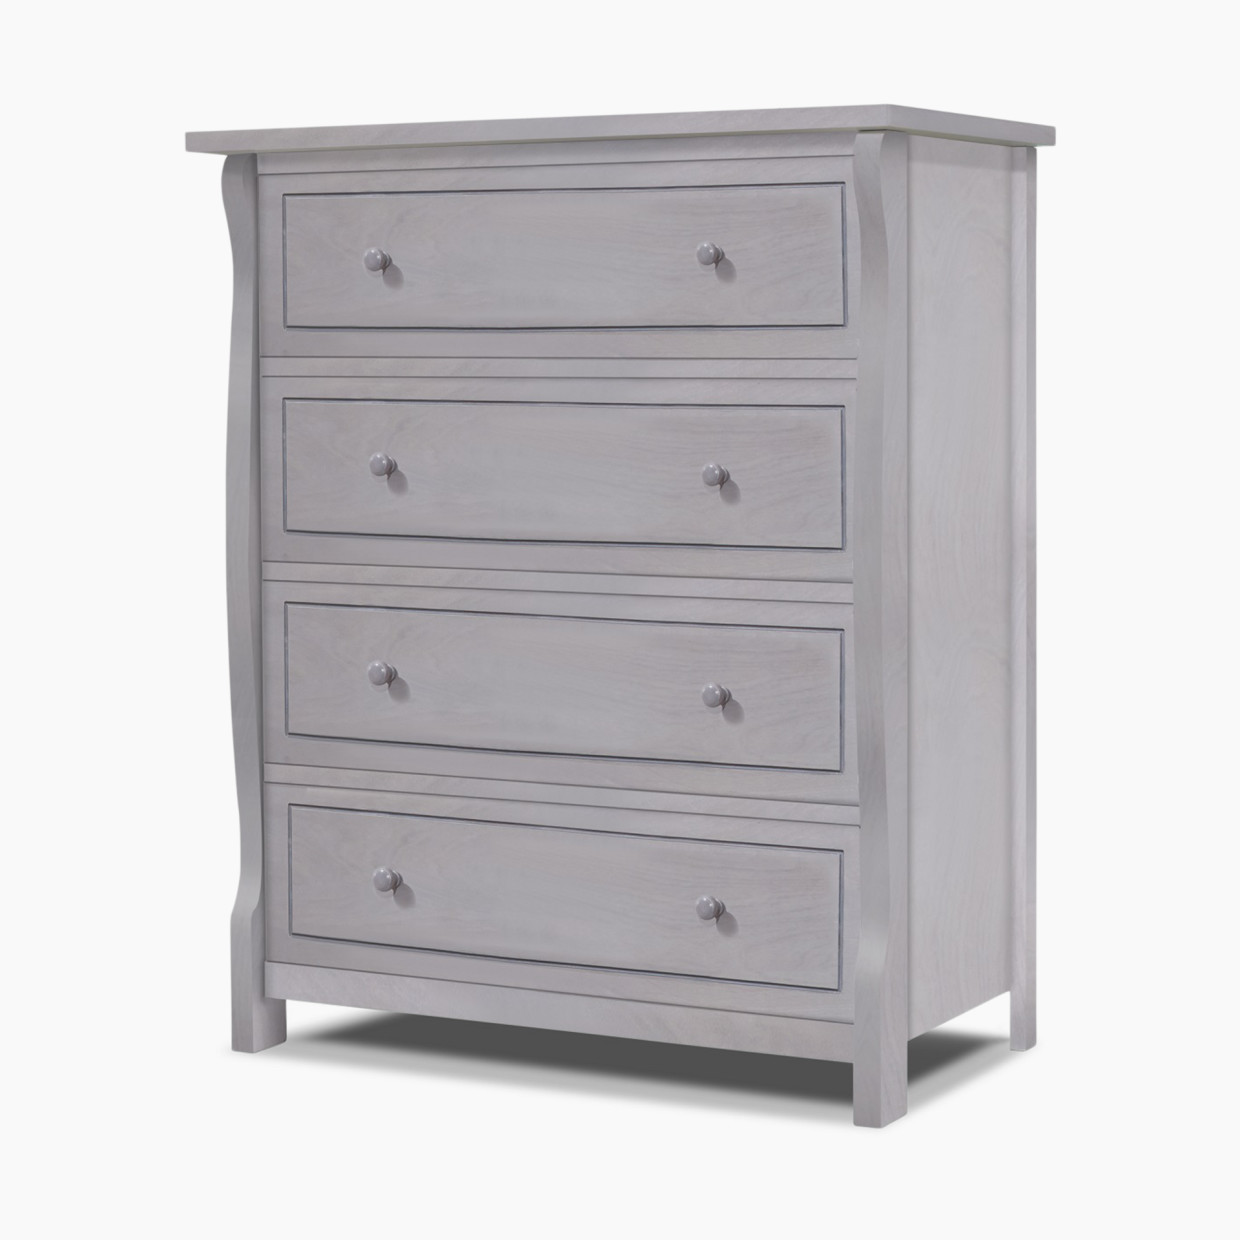 Sorelle Princeton Elite 4 Drawer Dresser - Weathered Gray.